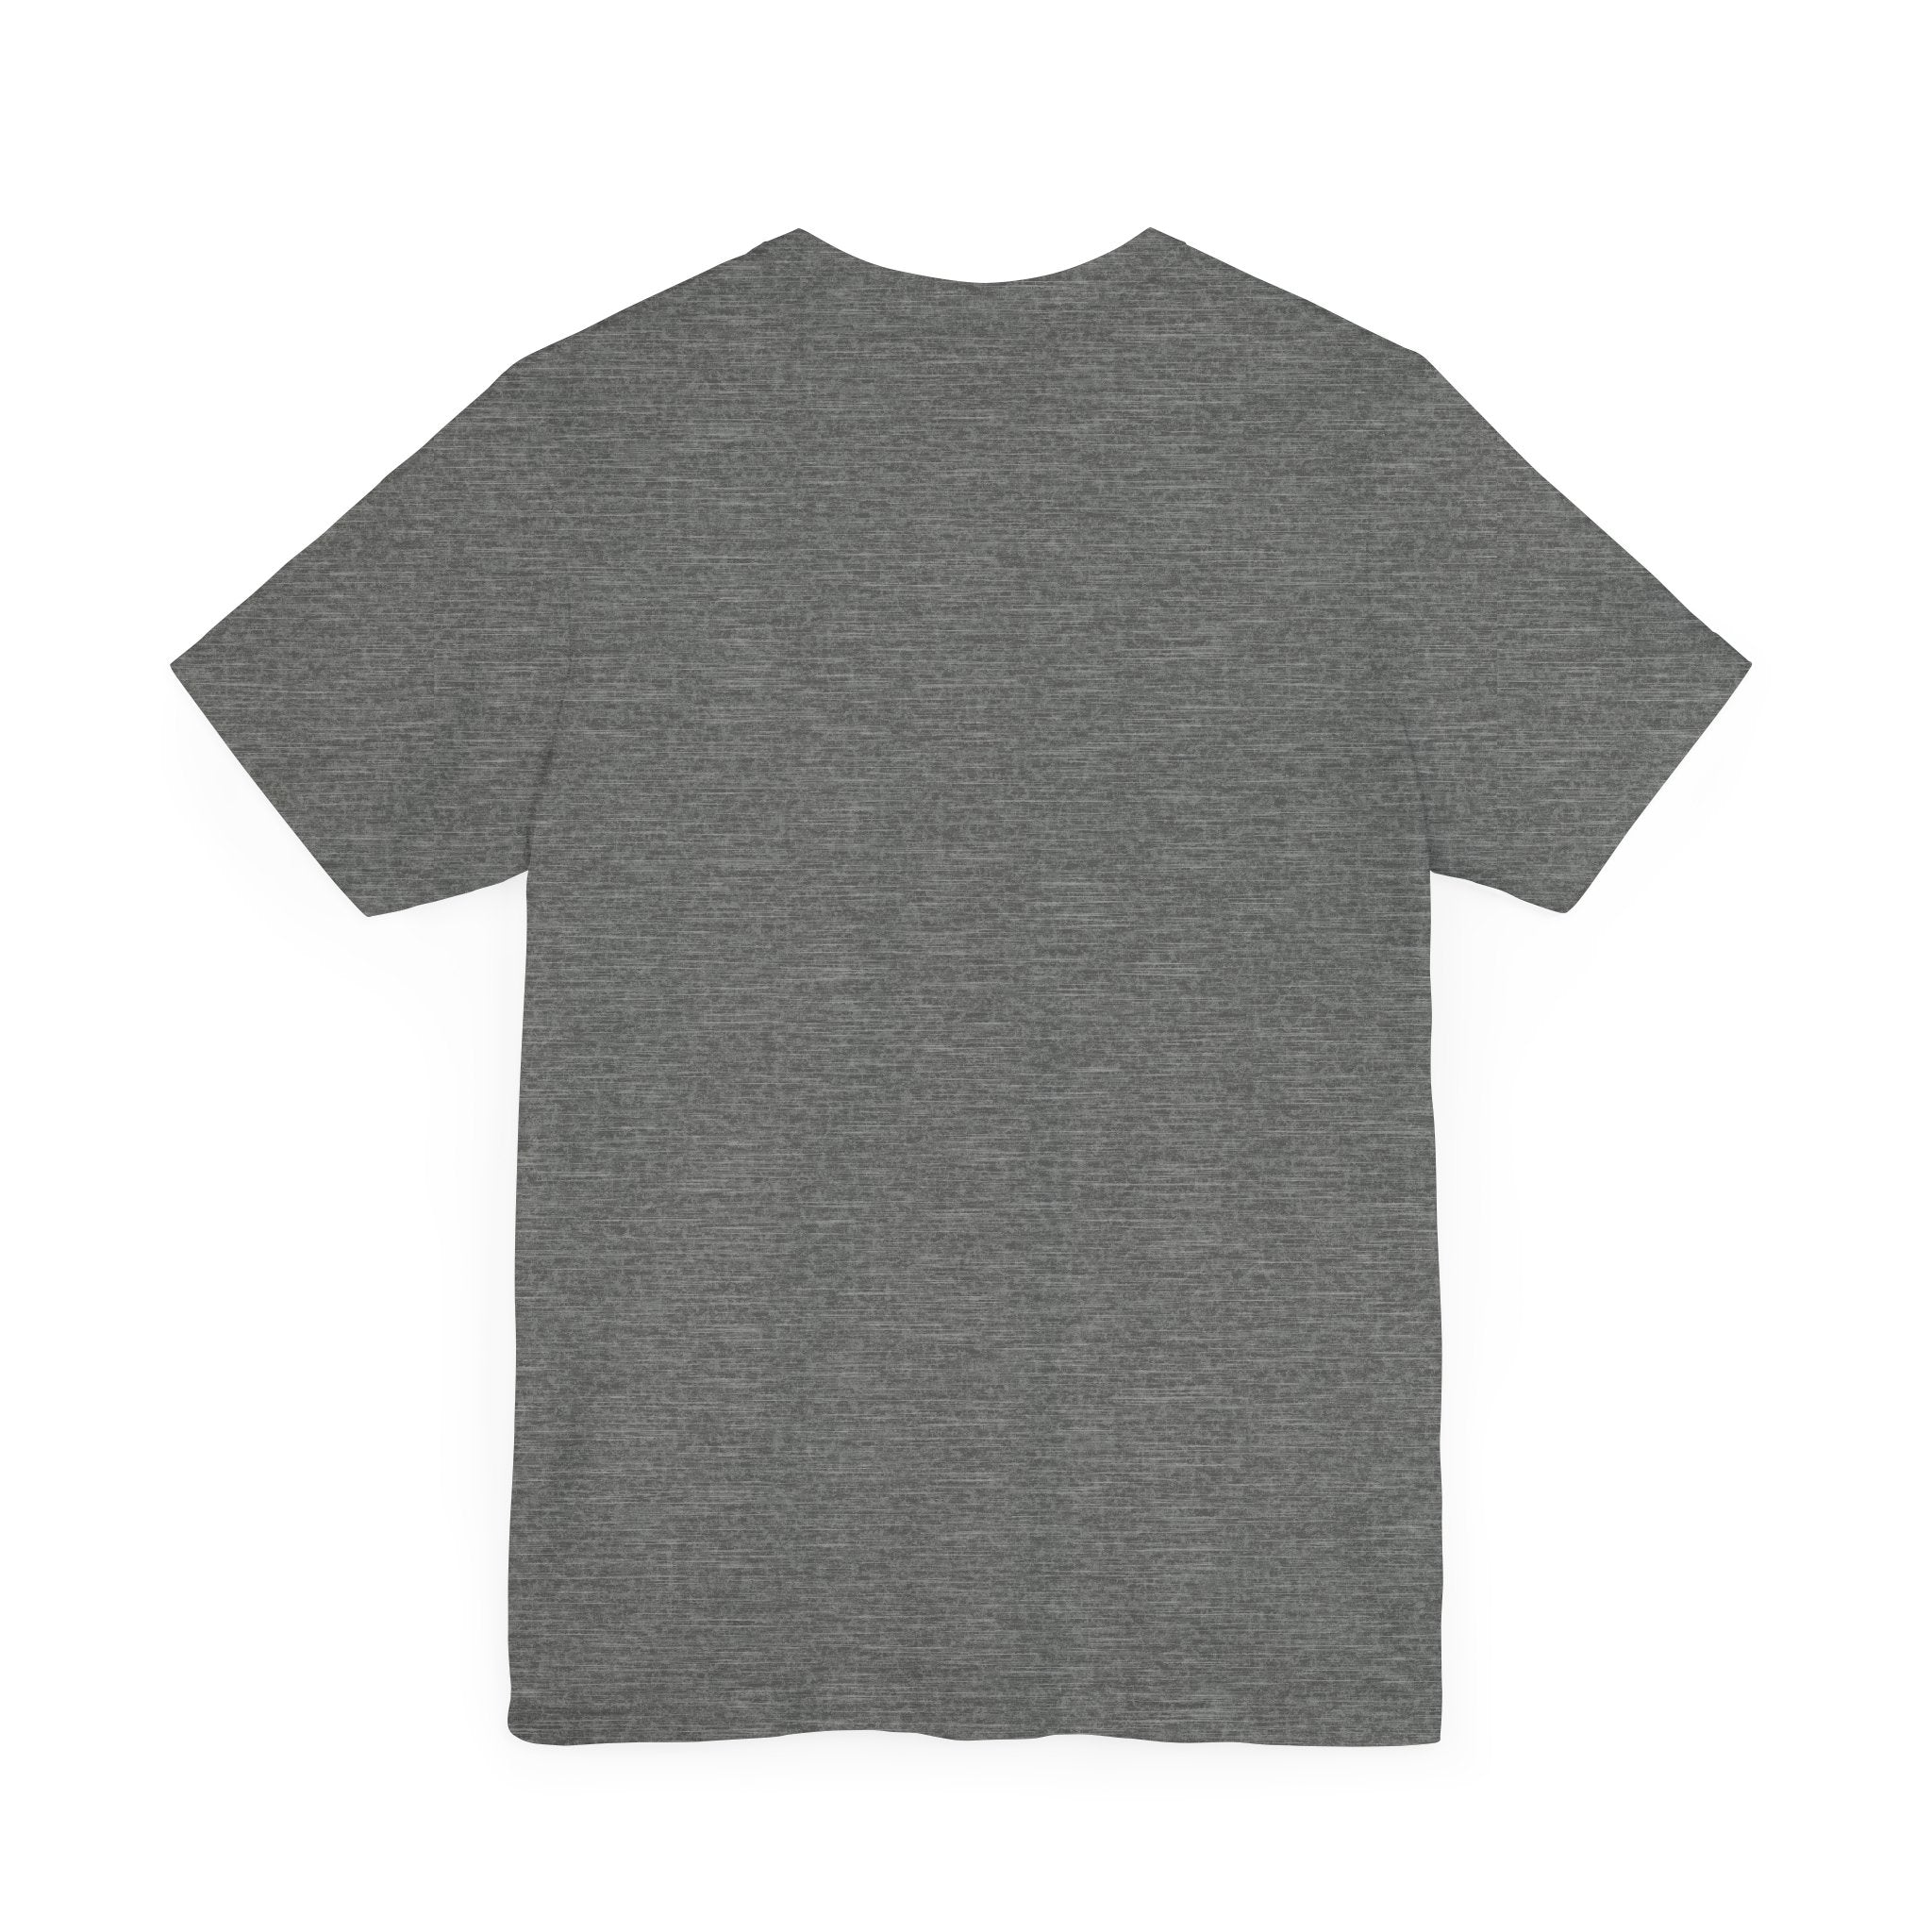 Grey unisex Jersey Short Sleeve Tee with white logo on back, printed item